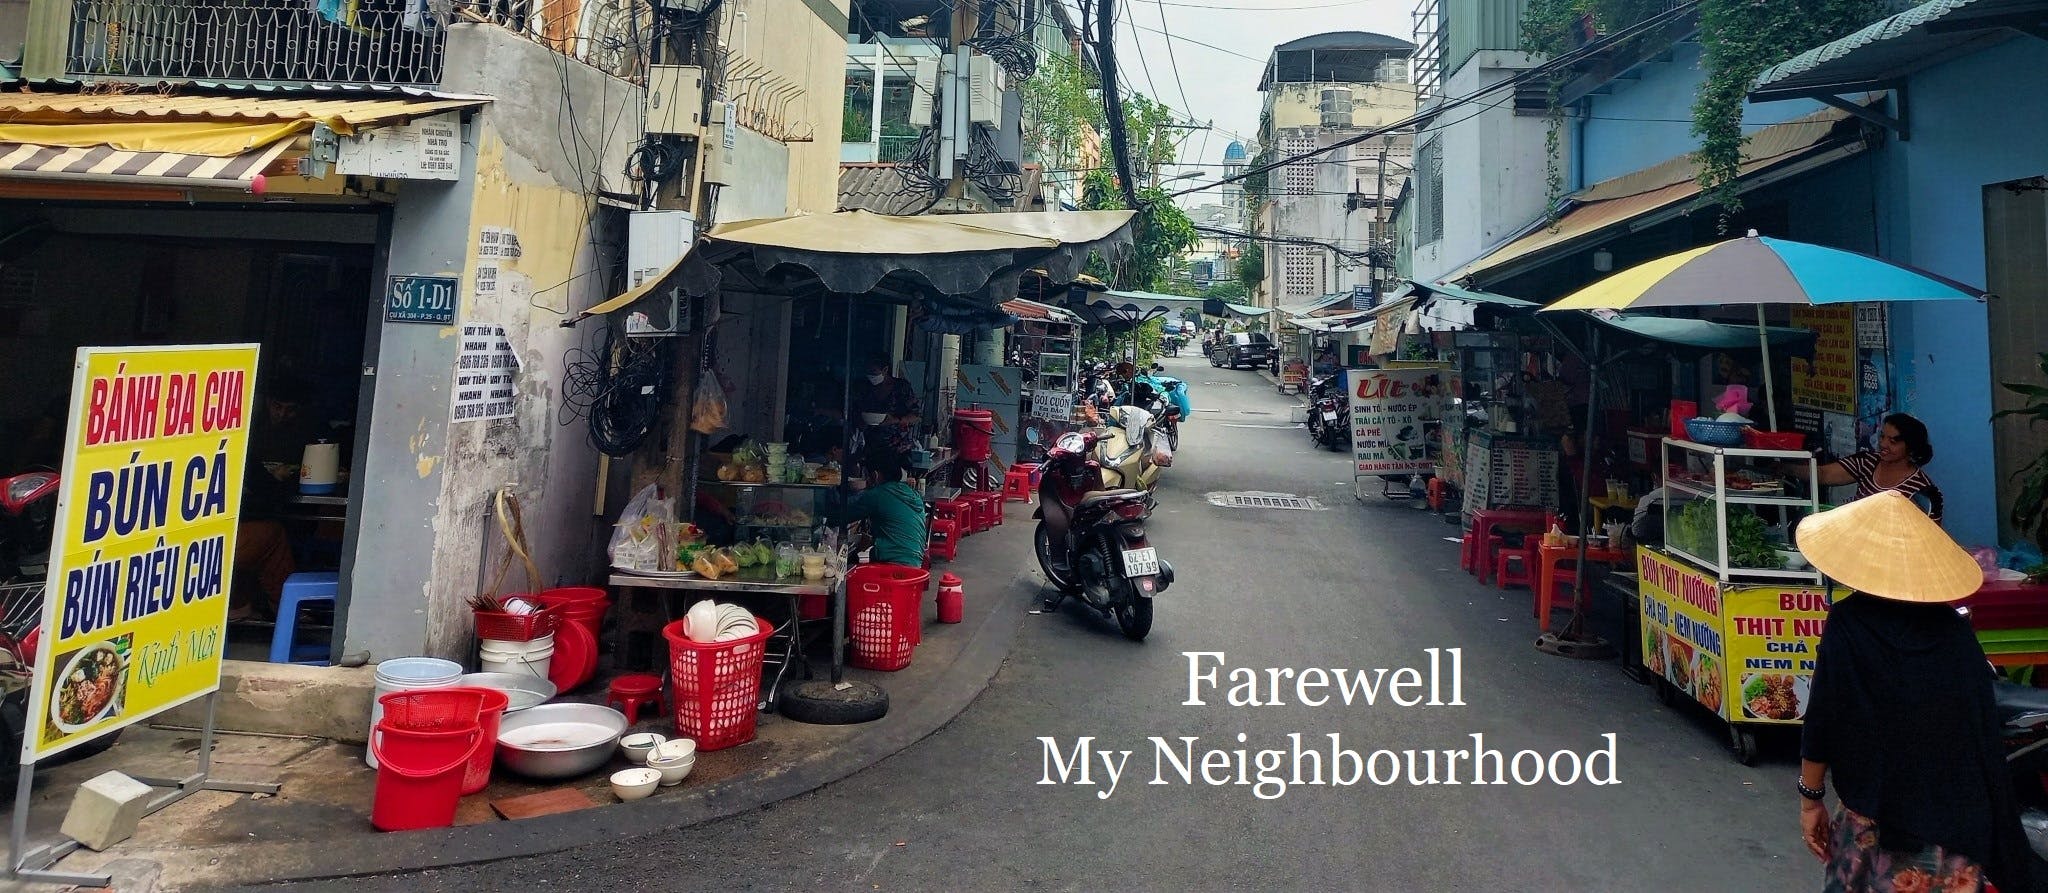 Farewell to my neighbourhood: Ward 25, Binh Thanh District, Saigon, Ho Chi Minh City, Vietnam